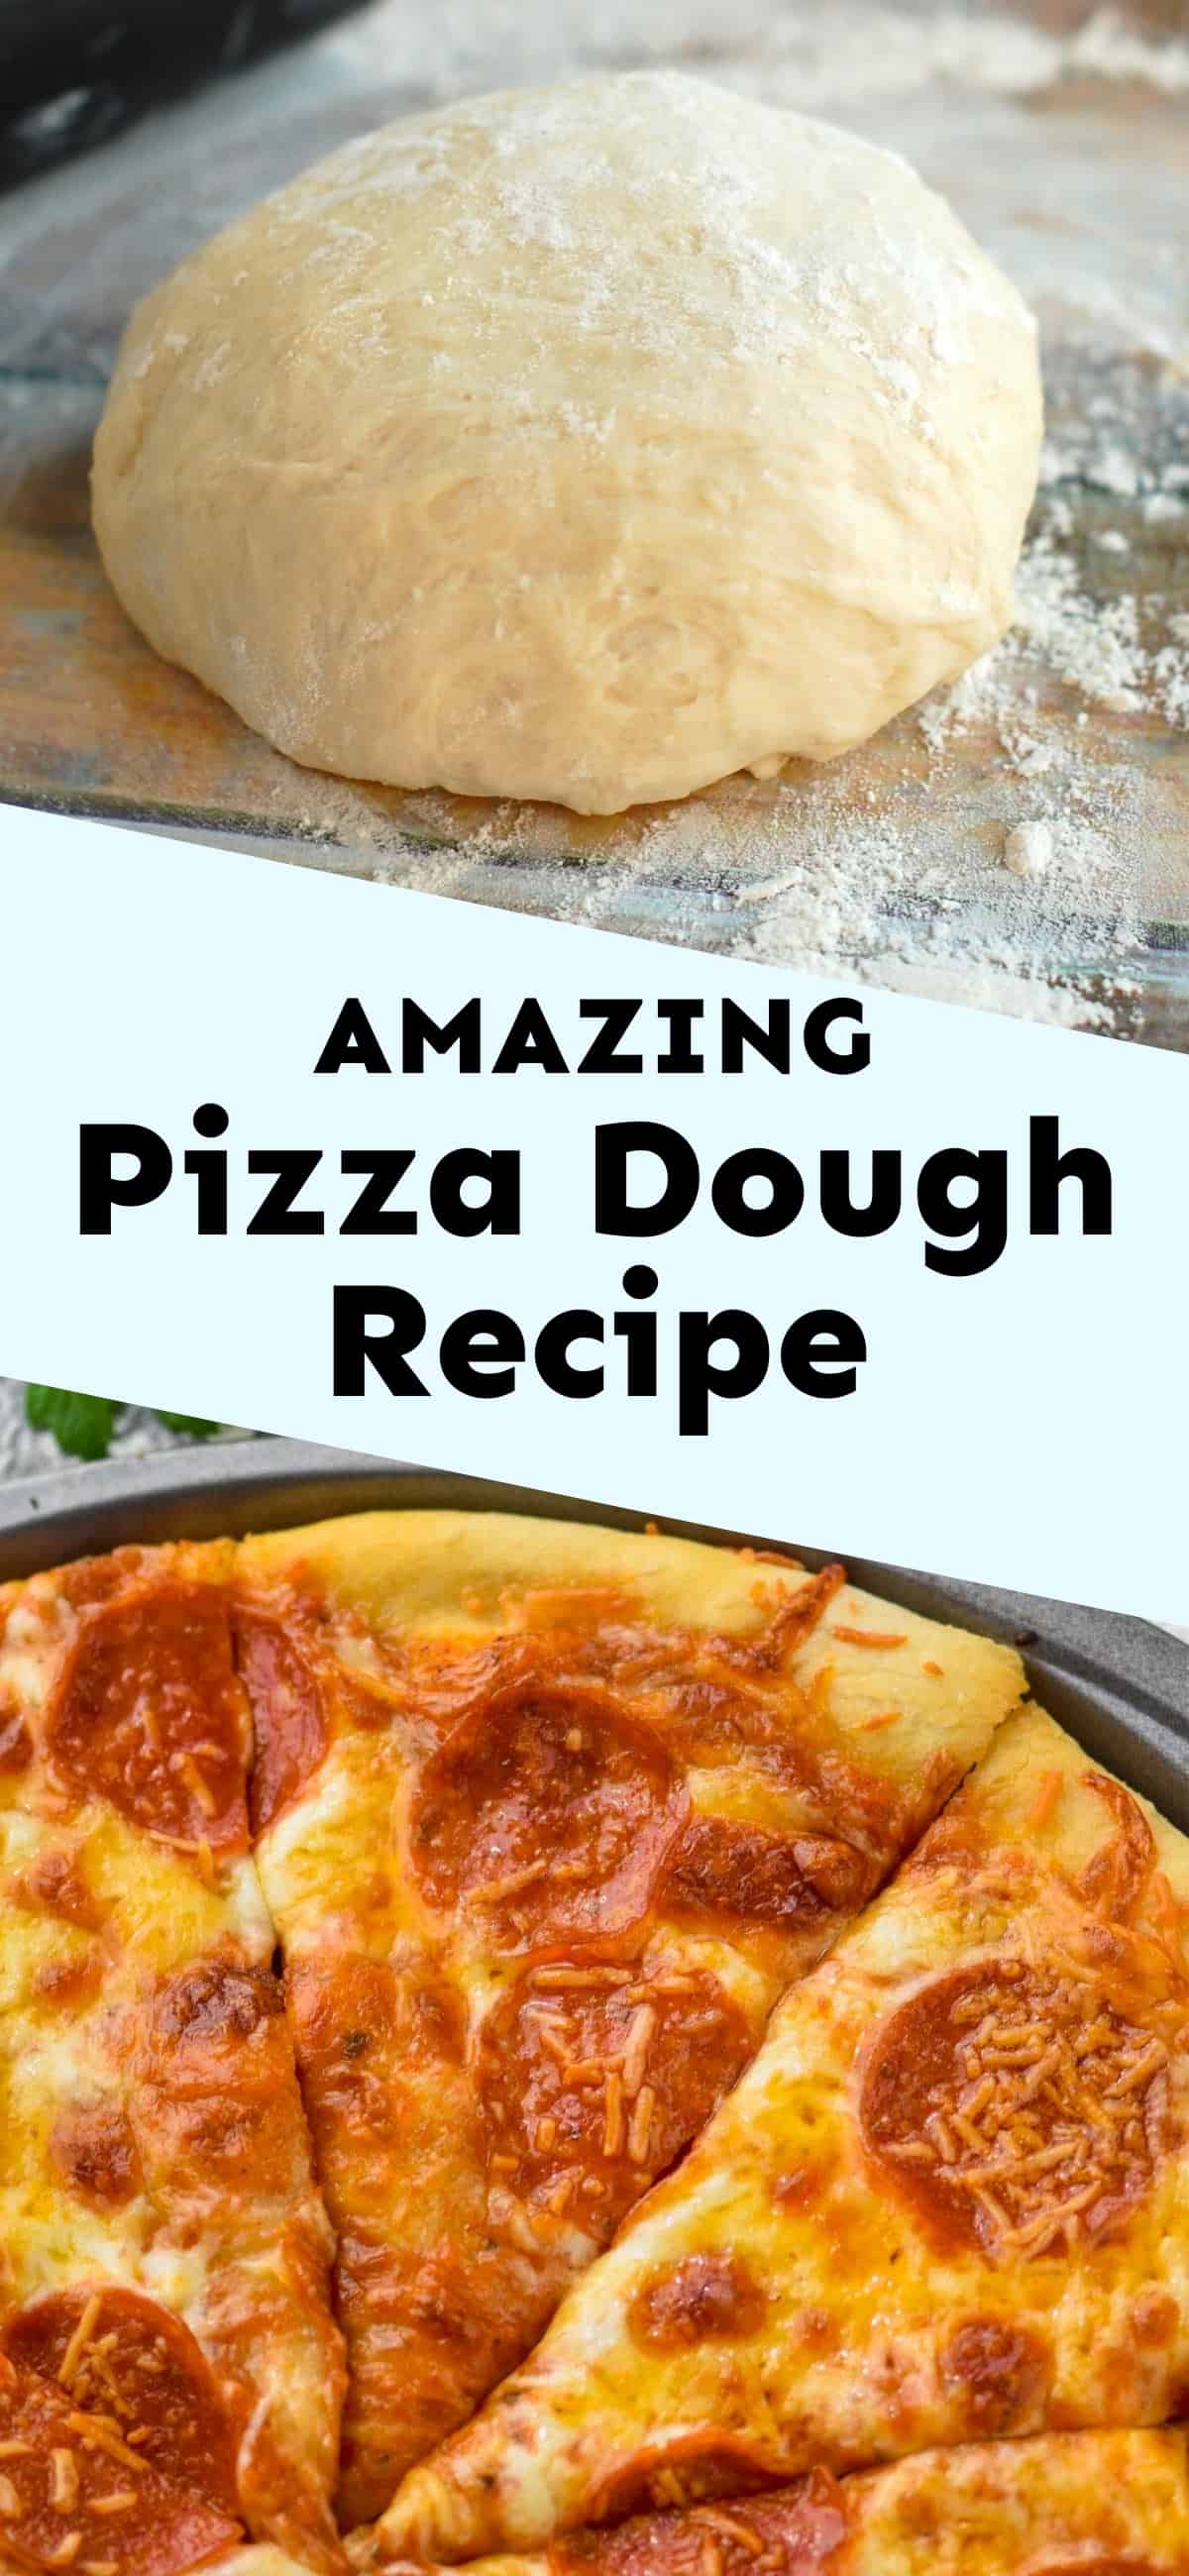 The Secret To The Perfect Pizza Dough Recipe - Simple Joy